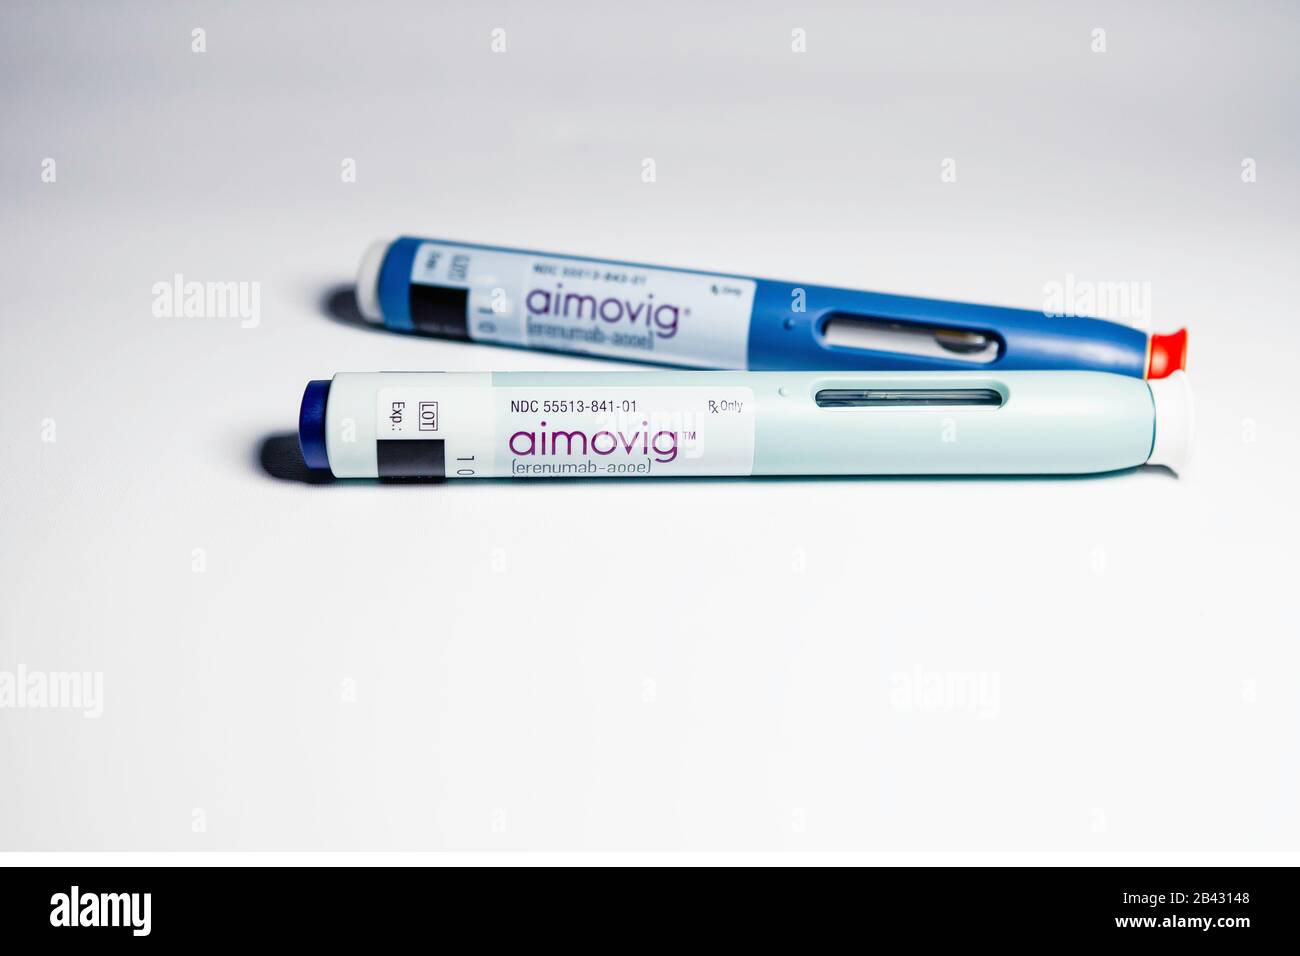 Aimovig (erenumab-aooe) 70 mg and 140 mg auto-injector devices, prescription drug for migraine prevention, studio, color, United States Stock Photo